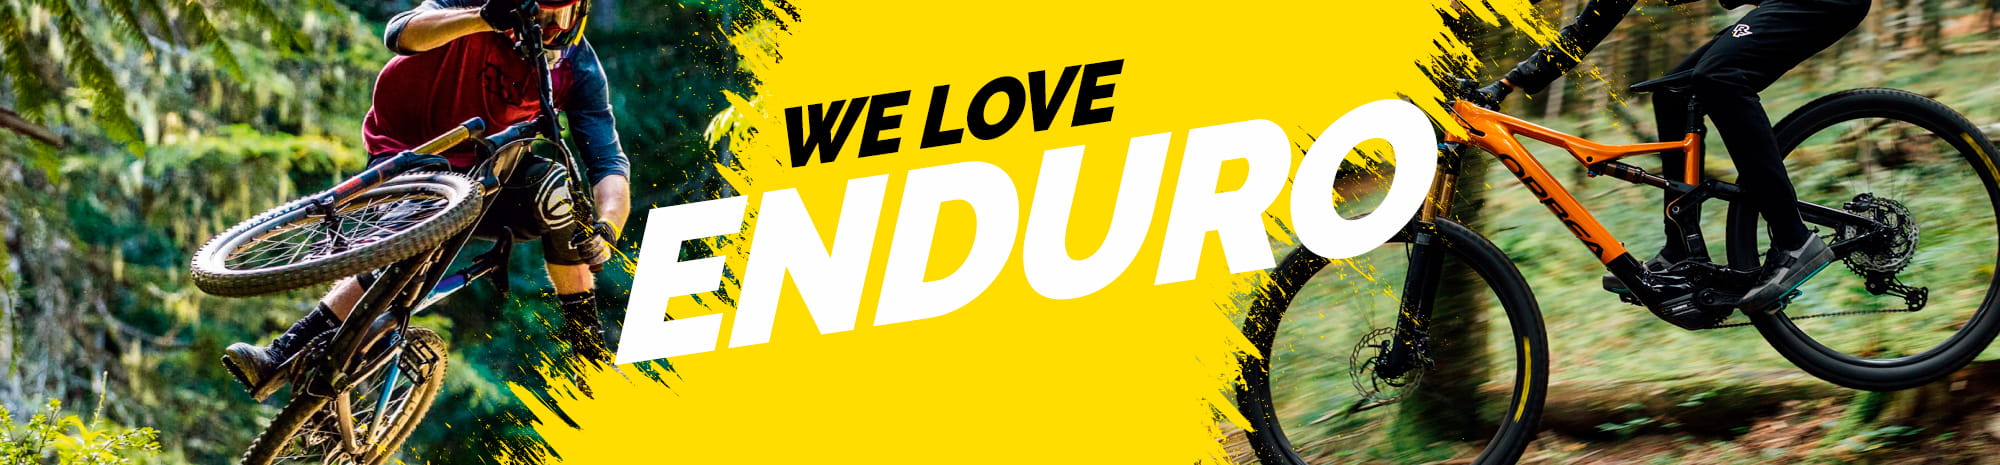 We love Enduro